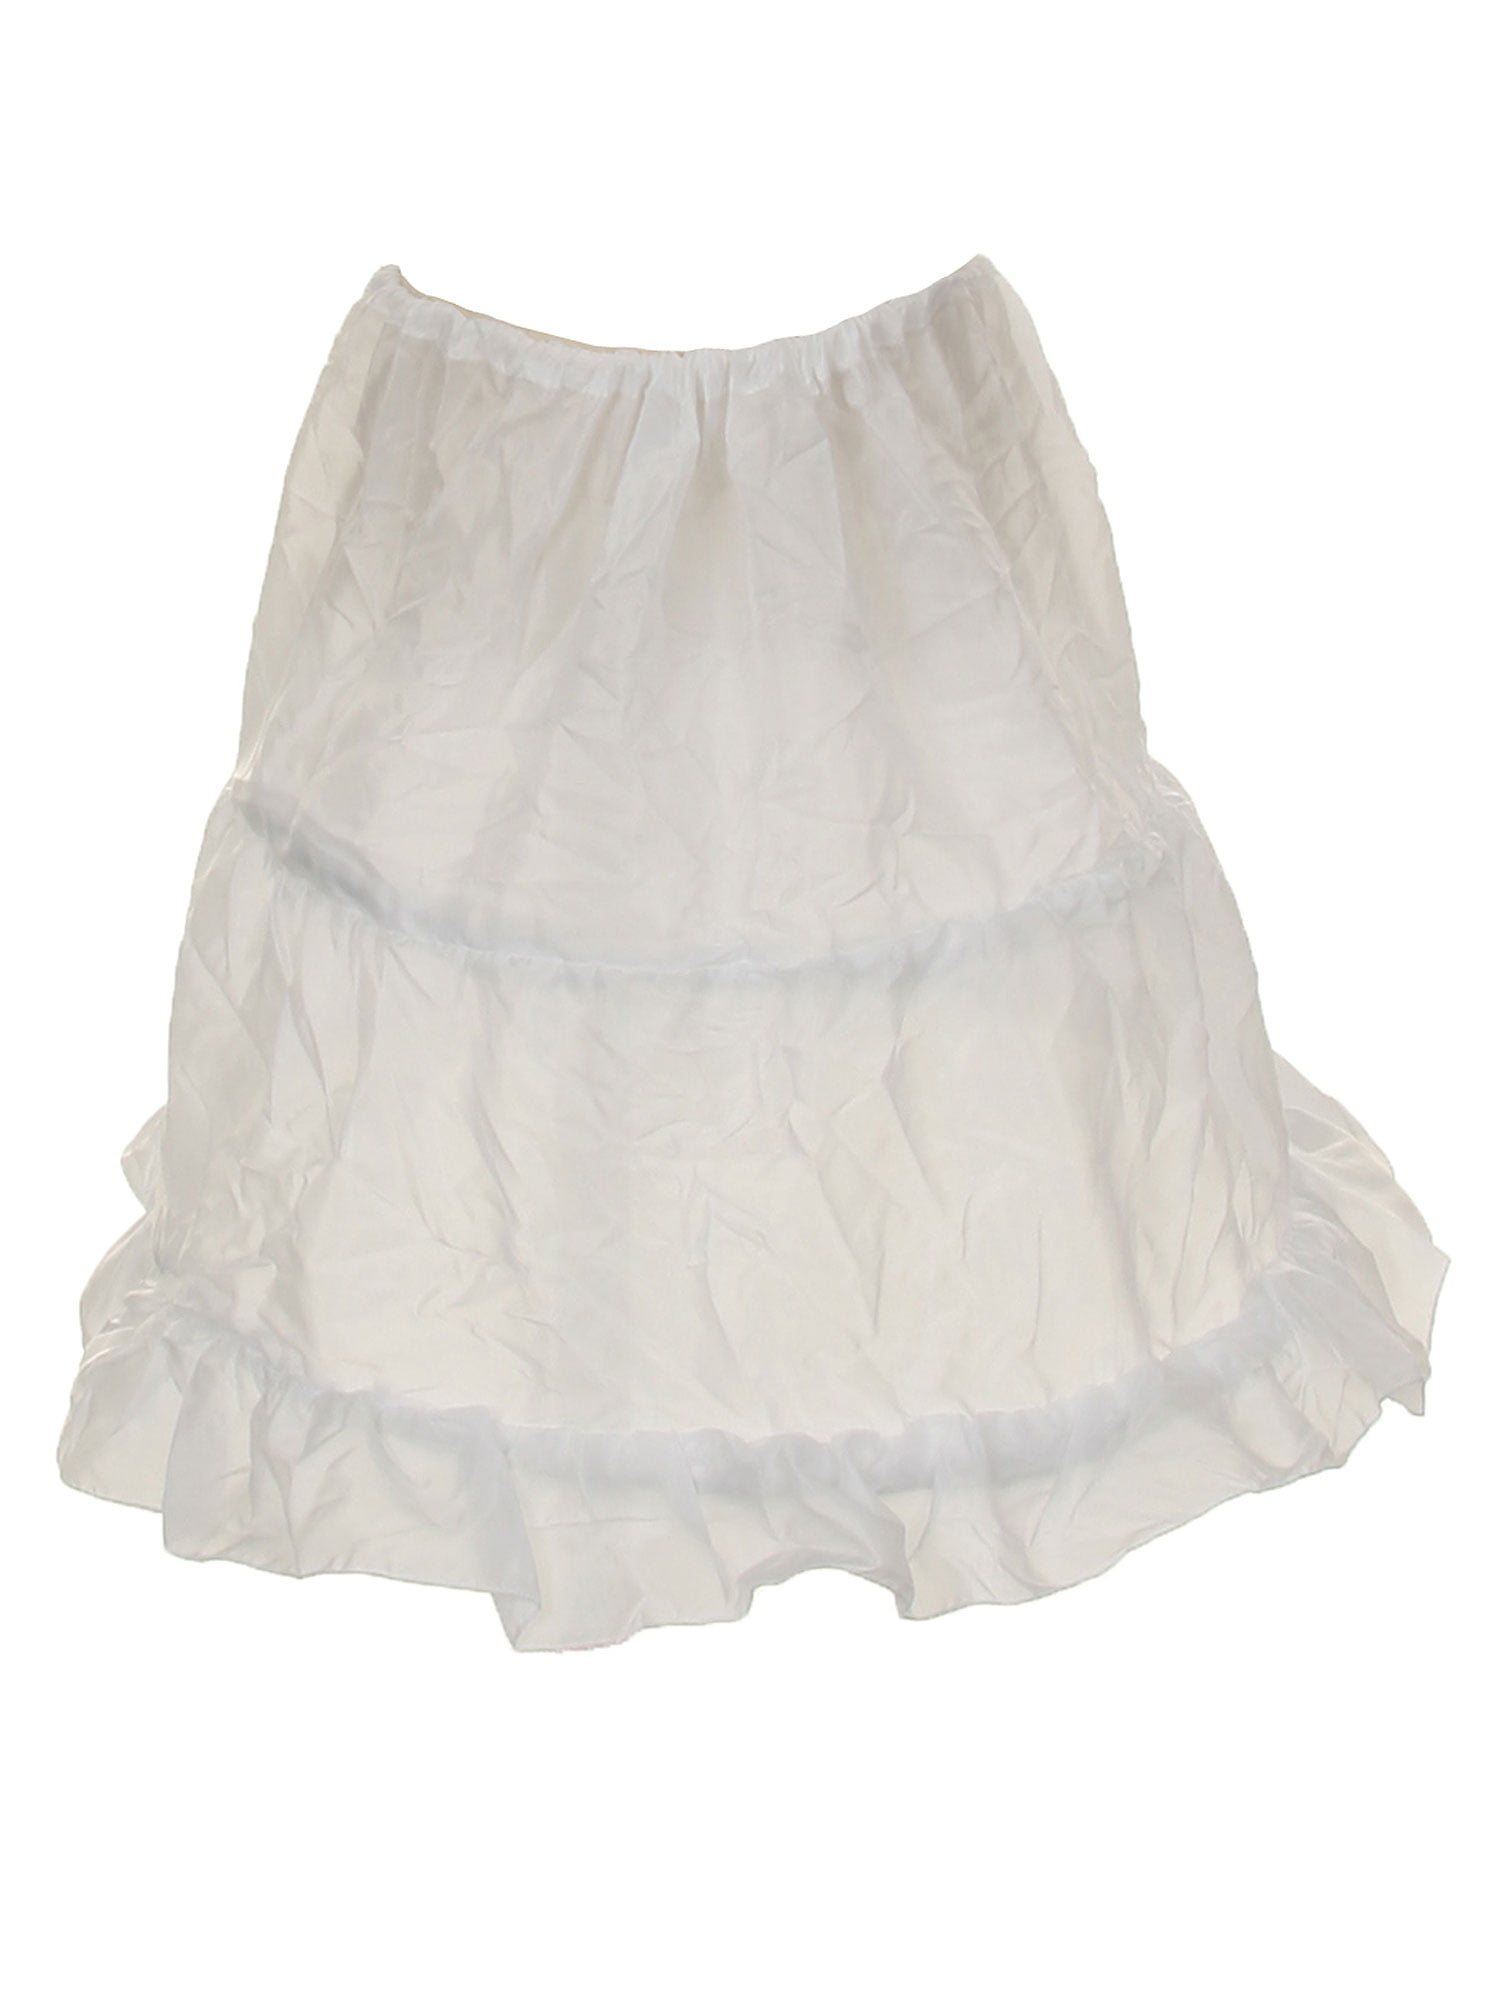 Hellery 2x Kinder Mädchen 2 Hoop Puffy Tulle Petticoat Elastic Short Chiffon Unterrock